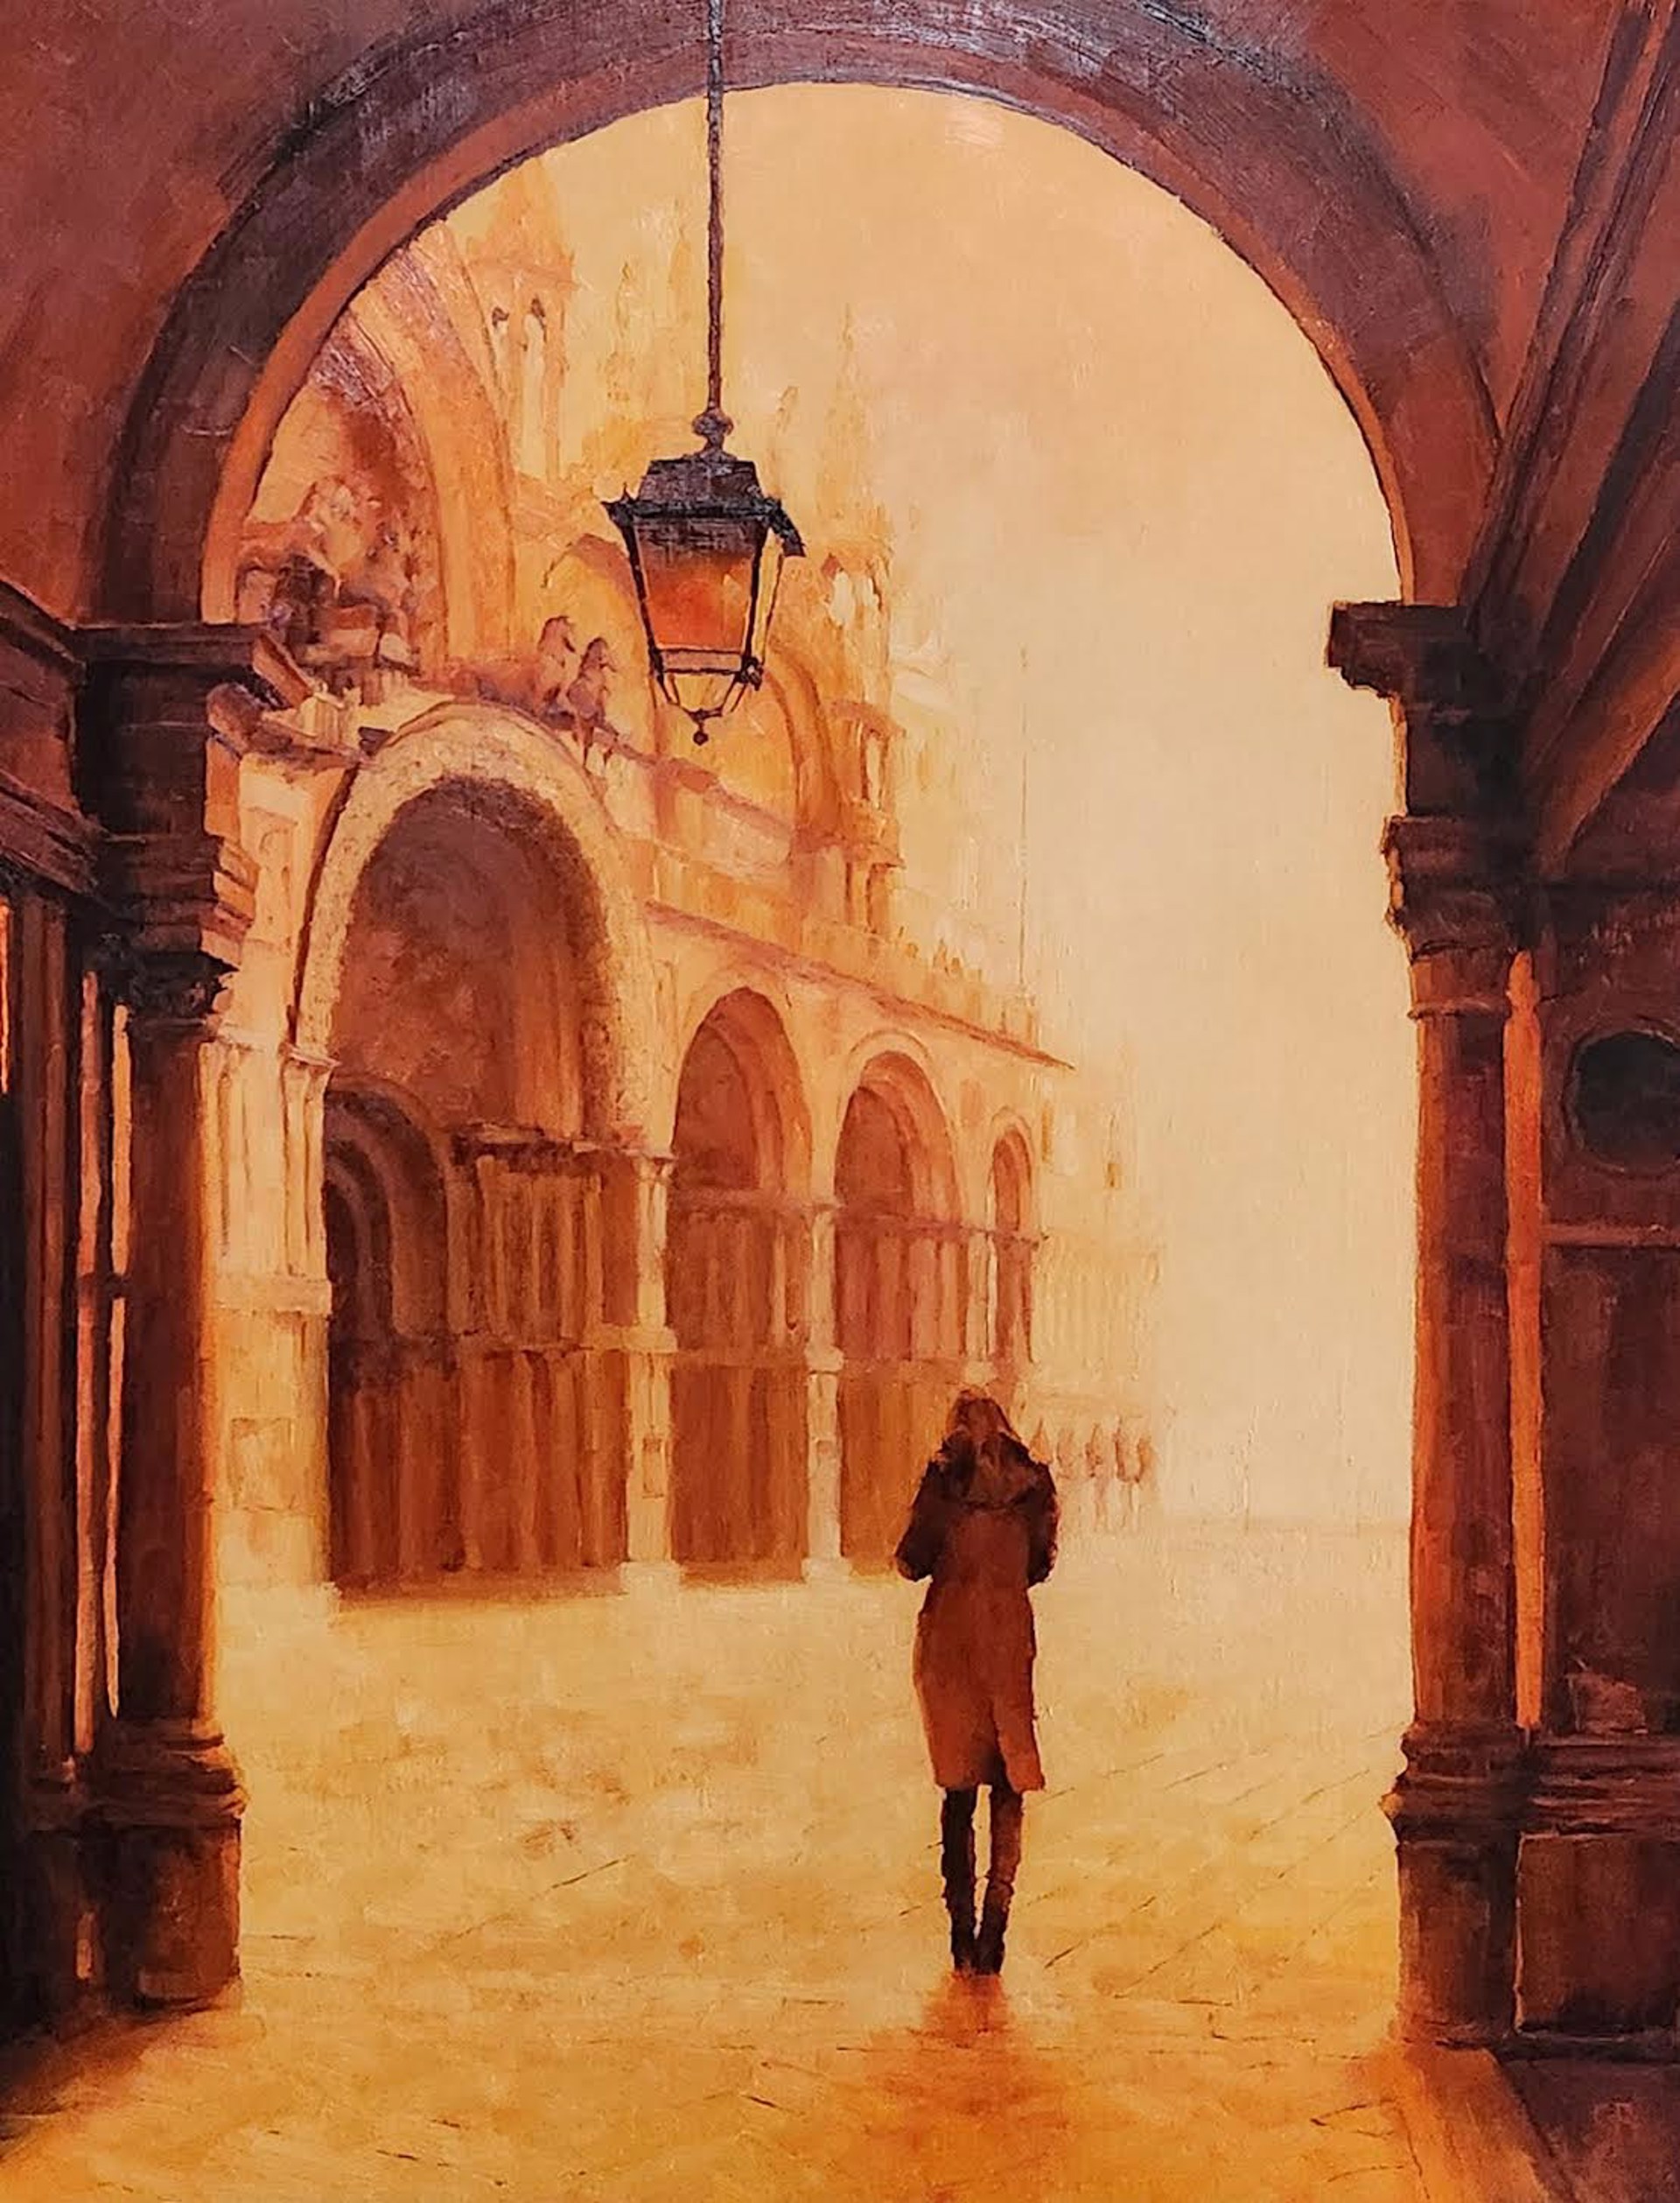 The Venice Job by George Bodine